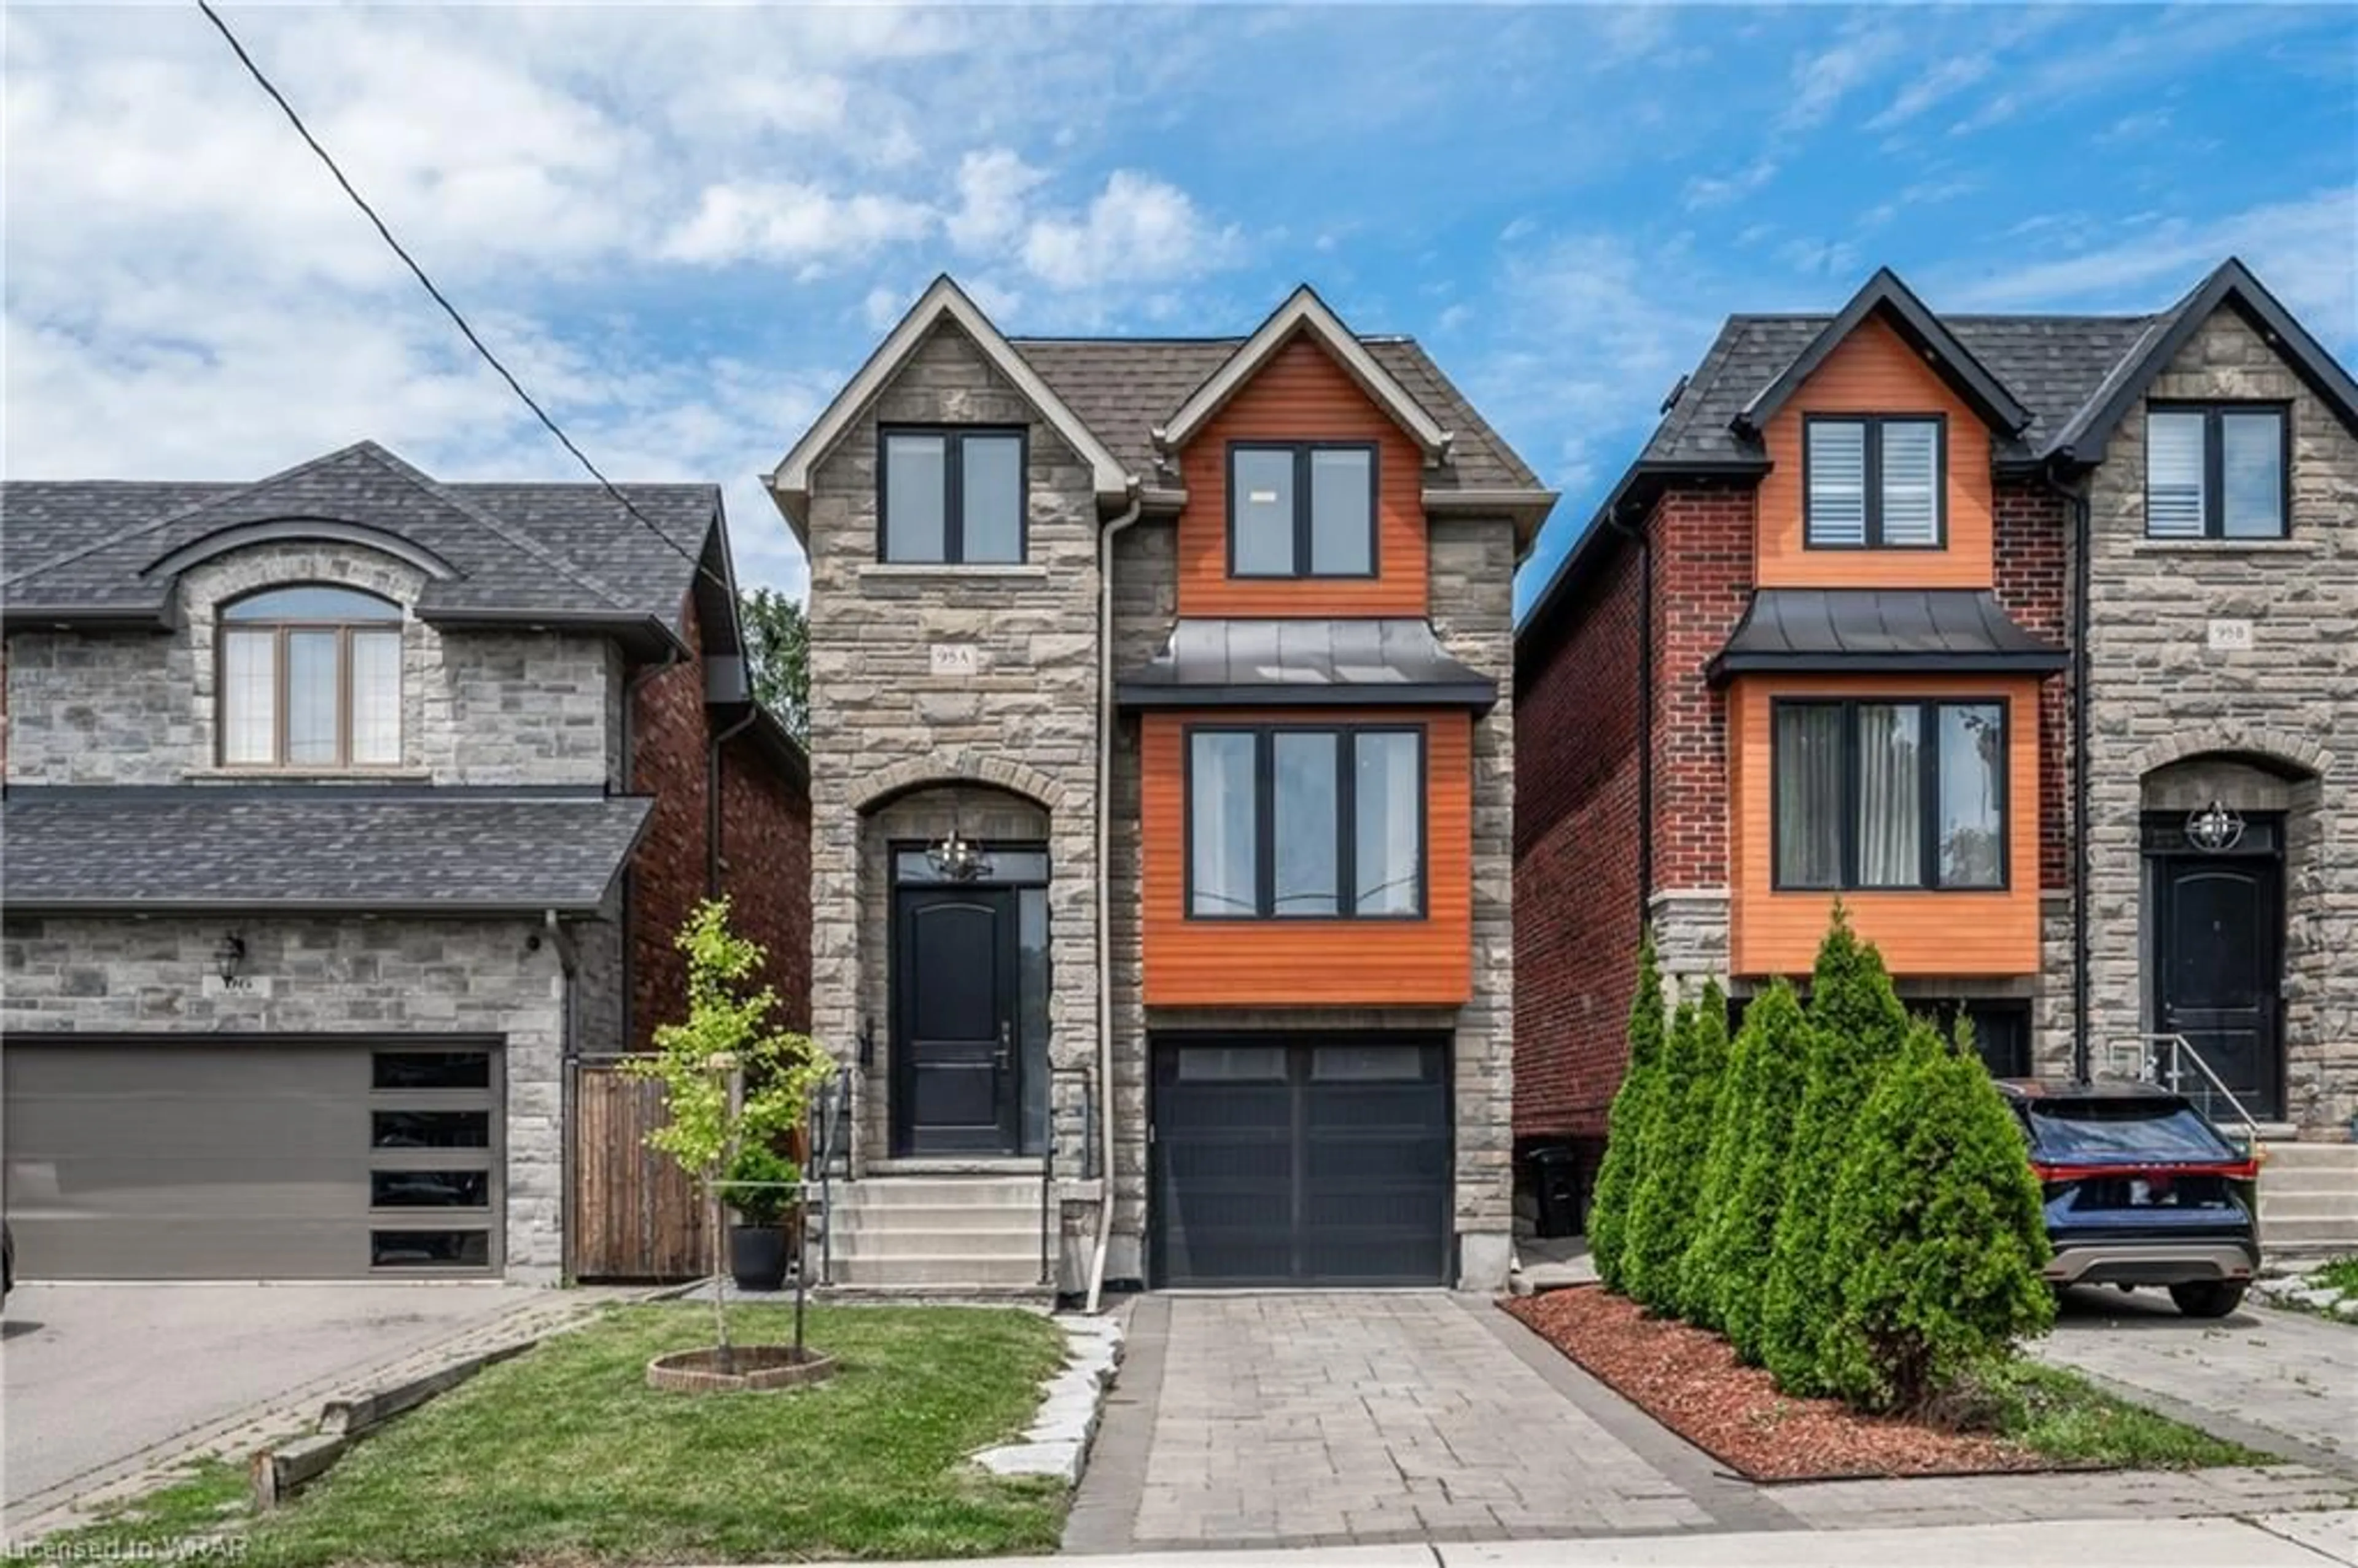 Home with brick exterior material for 98A Galbraith Ave, Toronto Ontario M4B 2B7